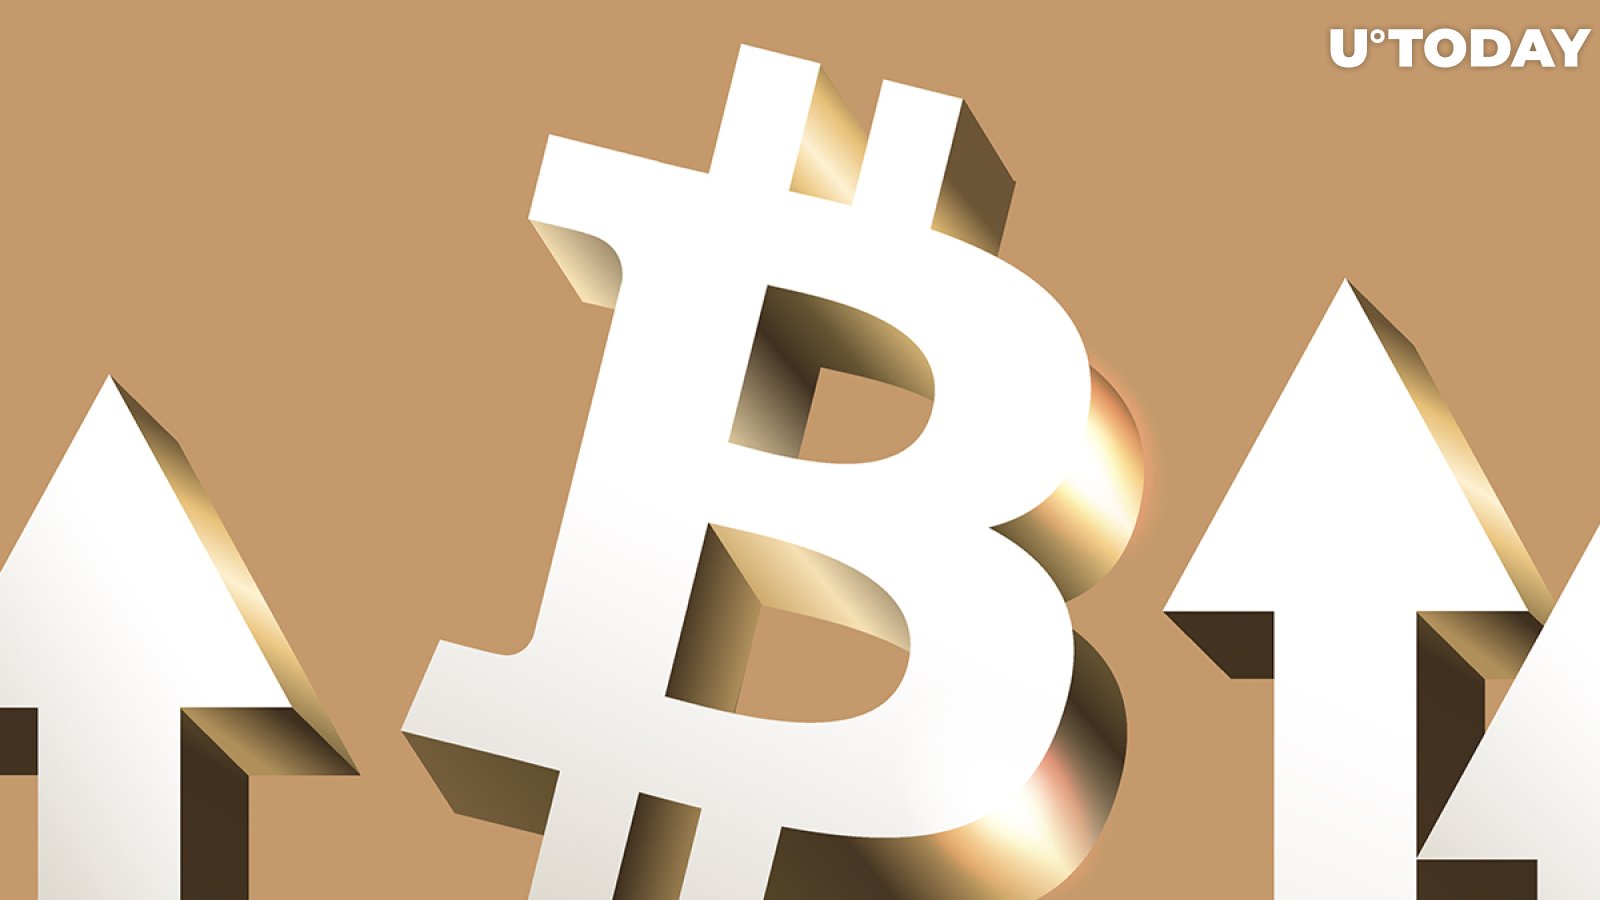 Pantera Capital's Dan Morehead: Bitcoin (BTC) Already Up 100% in This Bull Run